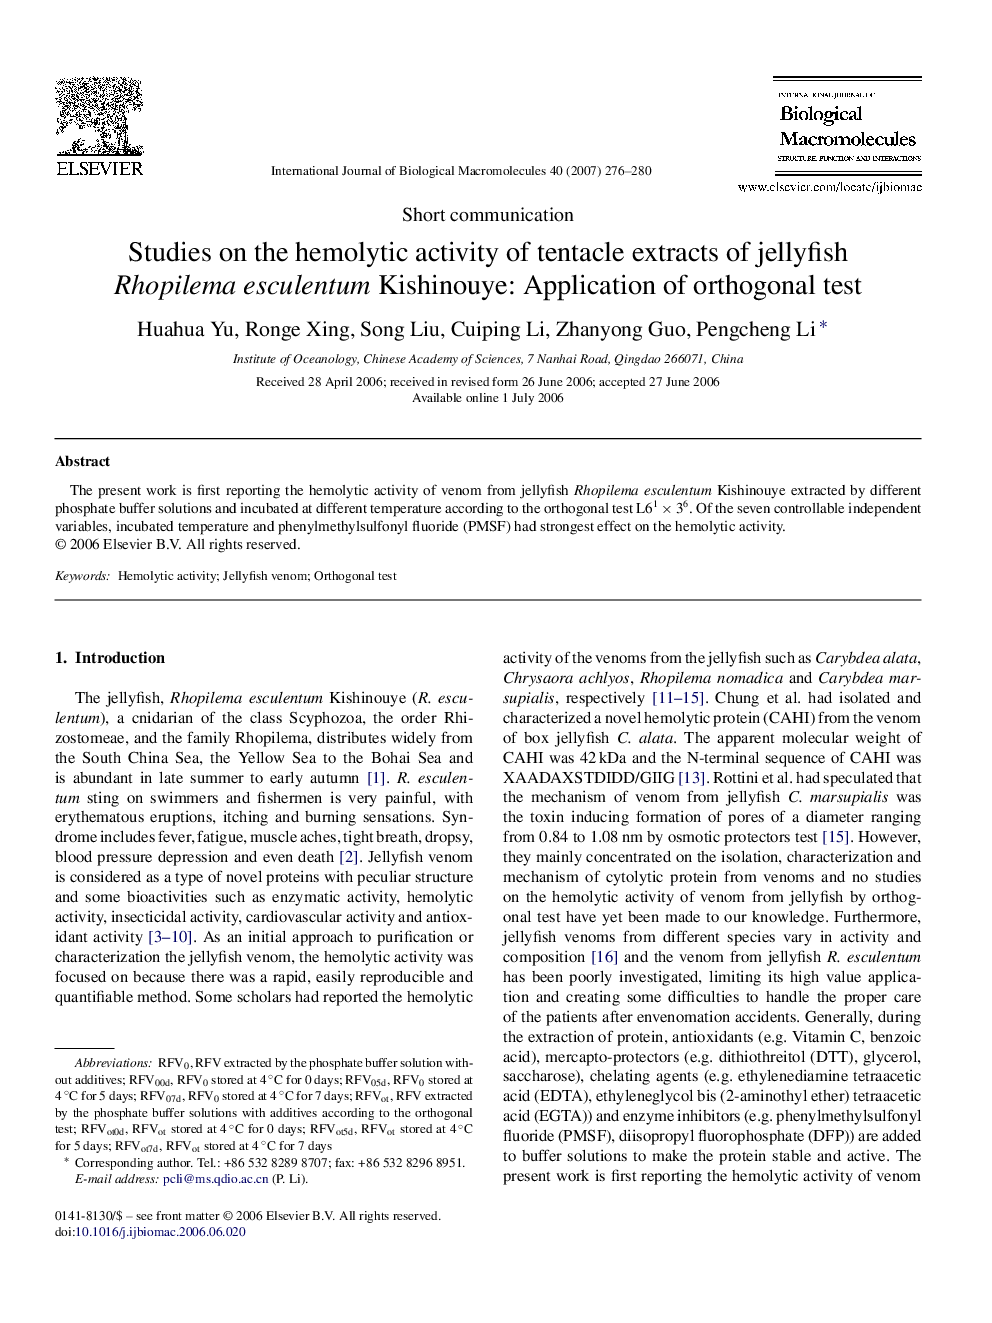 Studies on the hemolytic activity of tentacle extracts of jellyfish Rhopilema esculentum Kishinouye: Application of orthogonal test